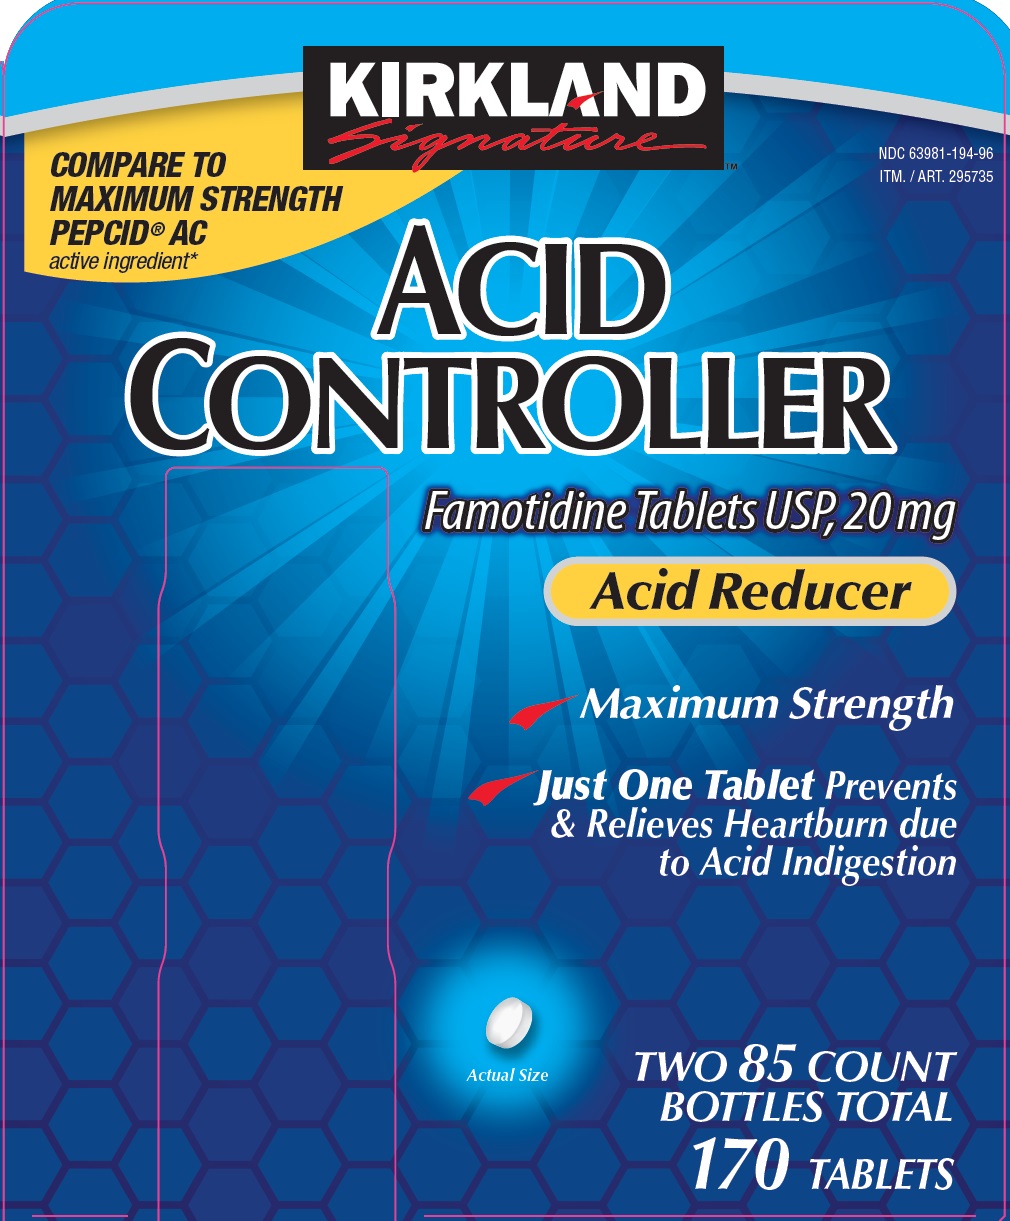  Kirkland Signature Acid Controller image 1